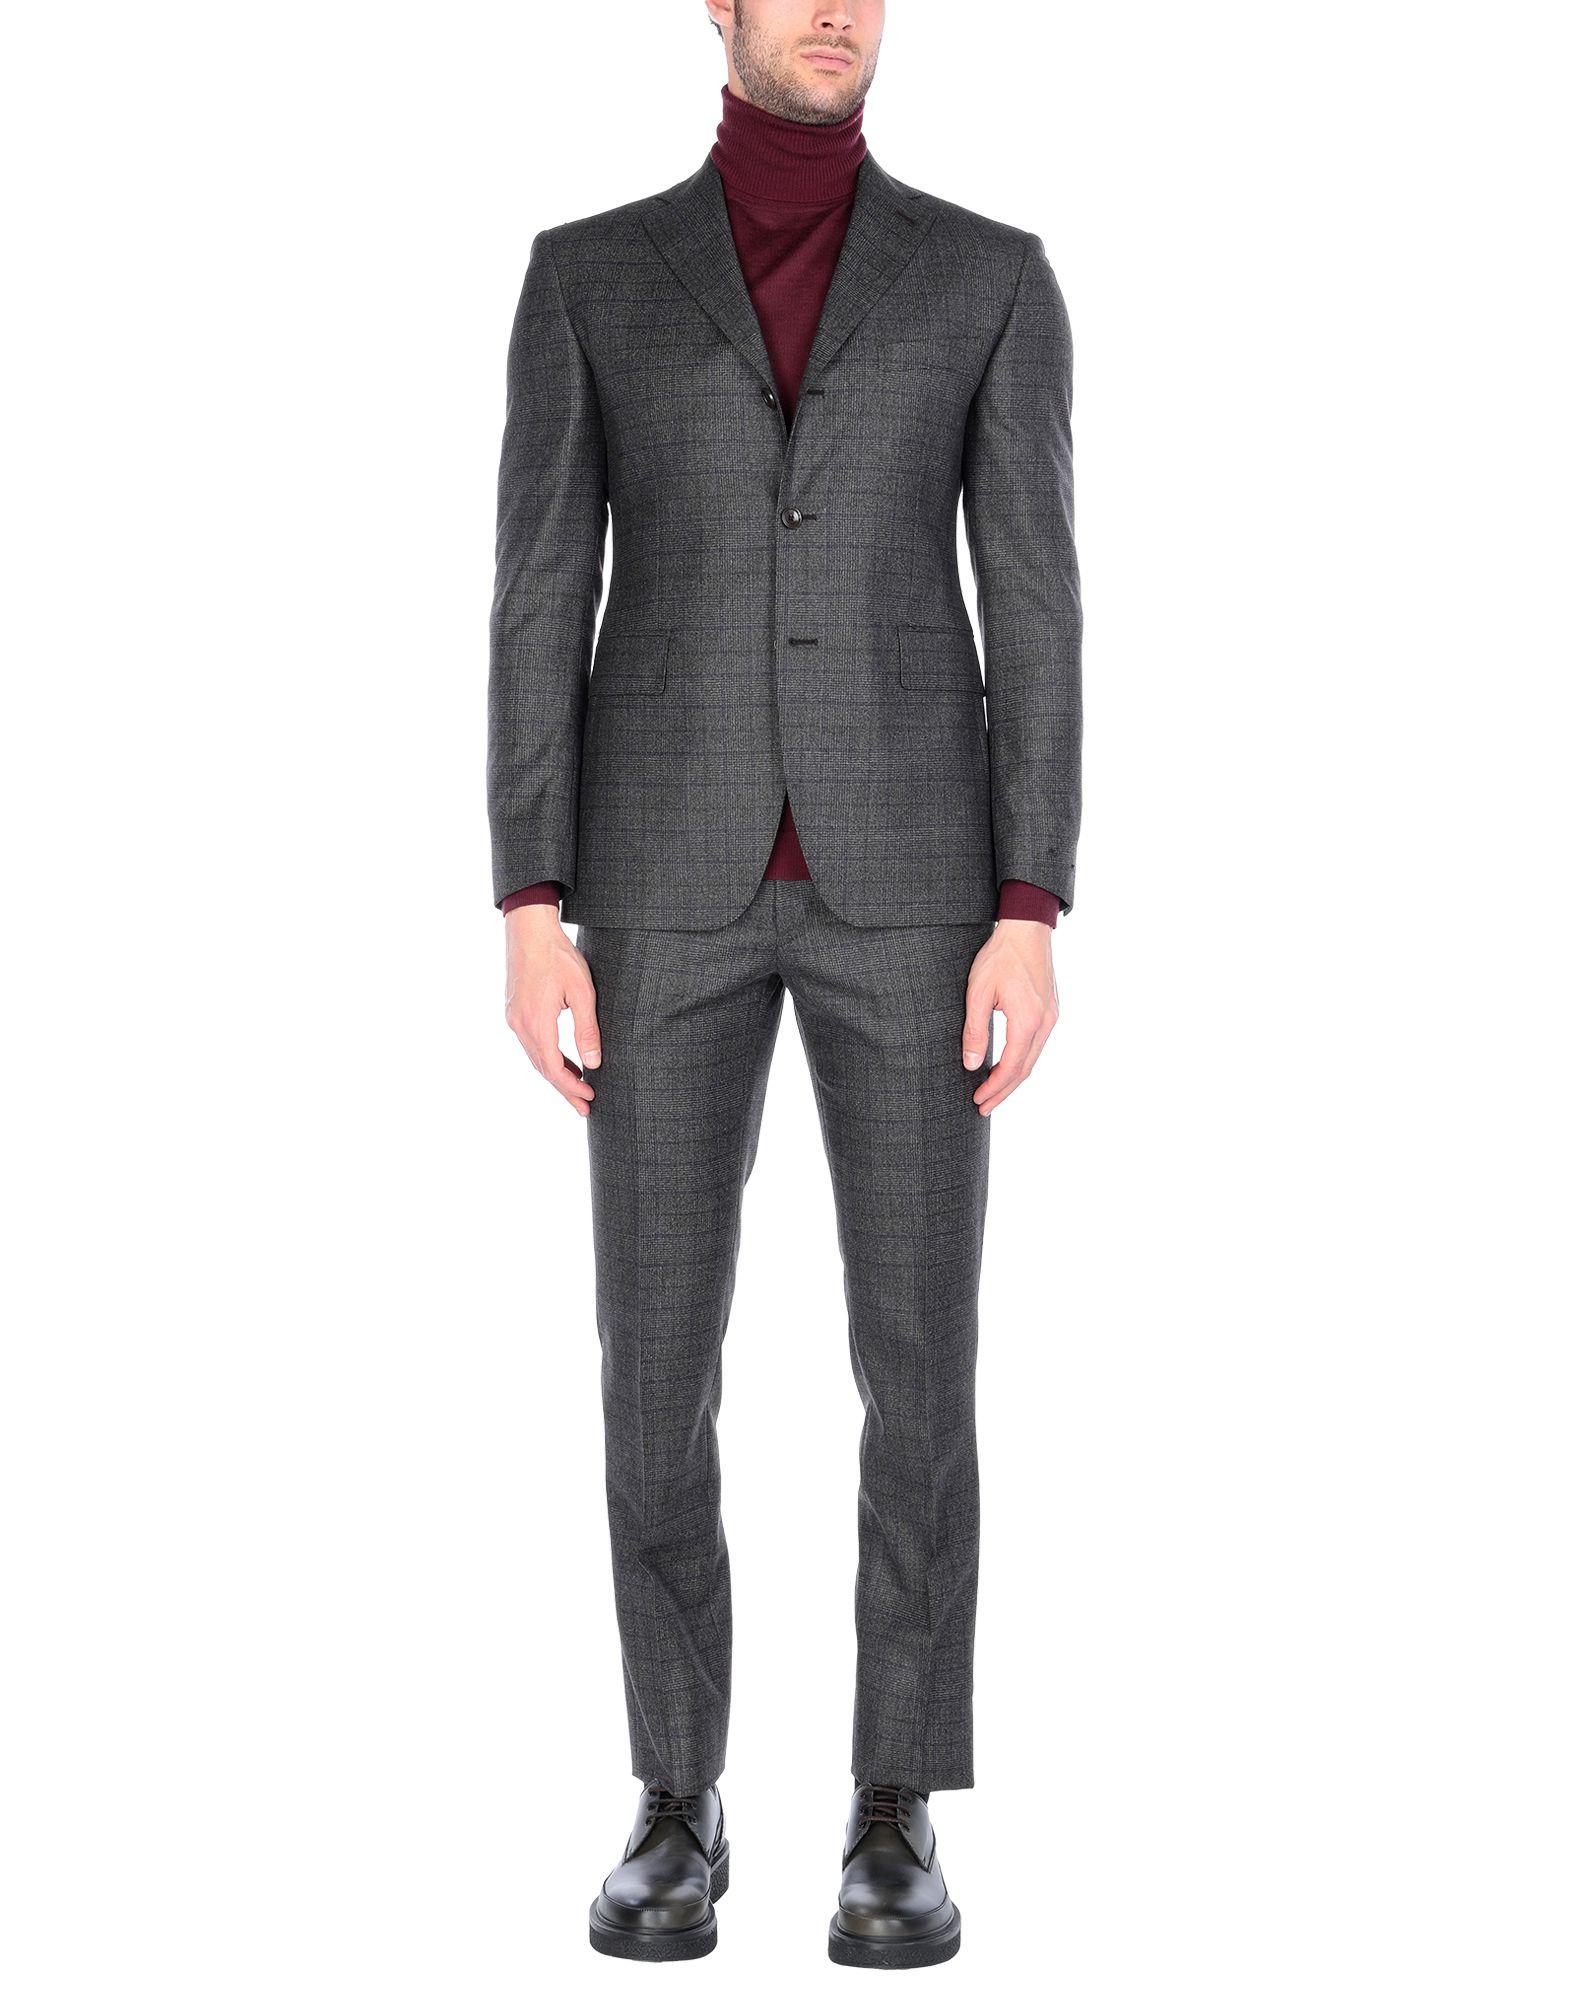 Tagliatore Flannel Suit in Lead (Gray) for Men - Lyst